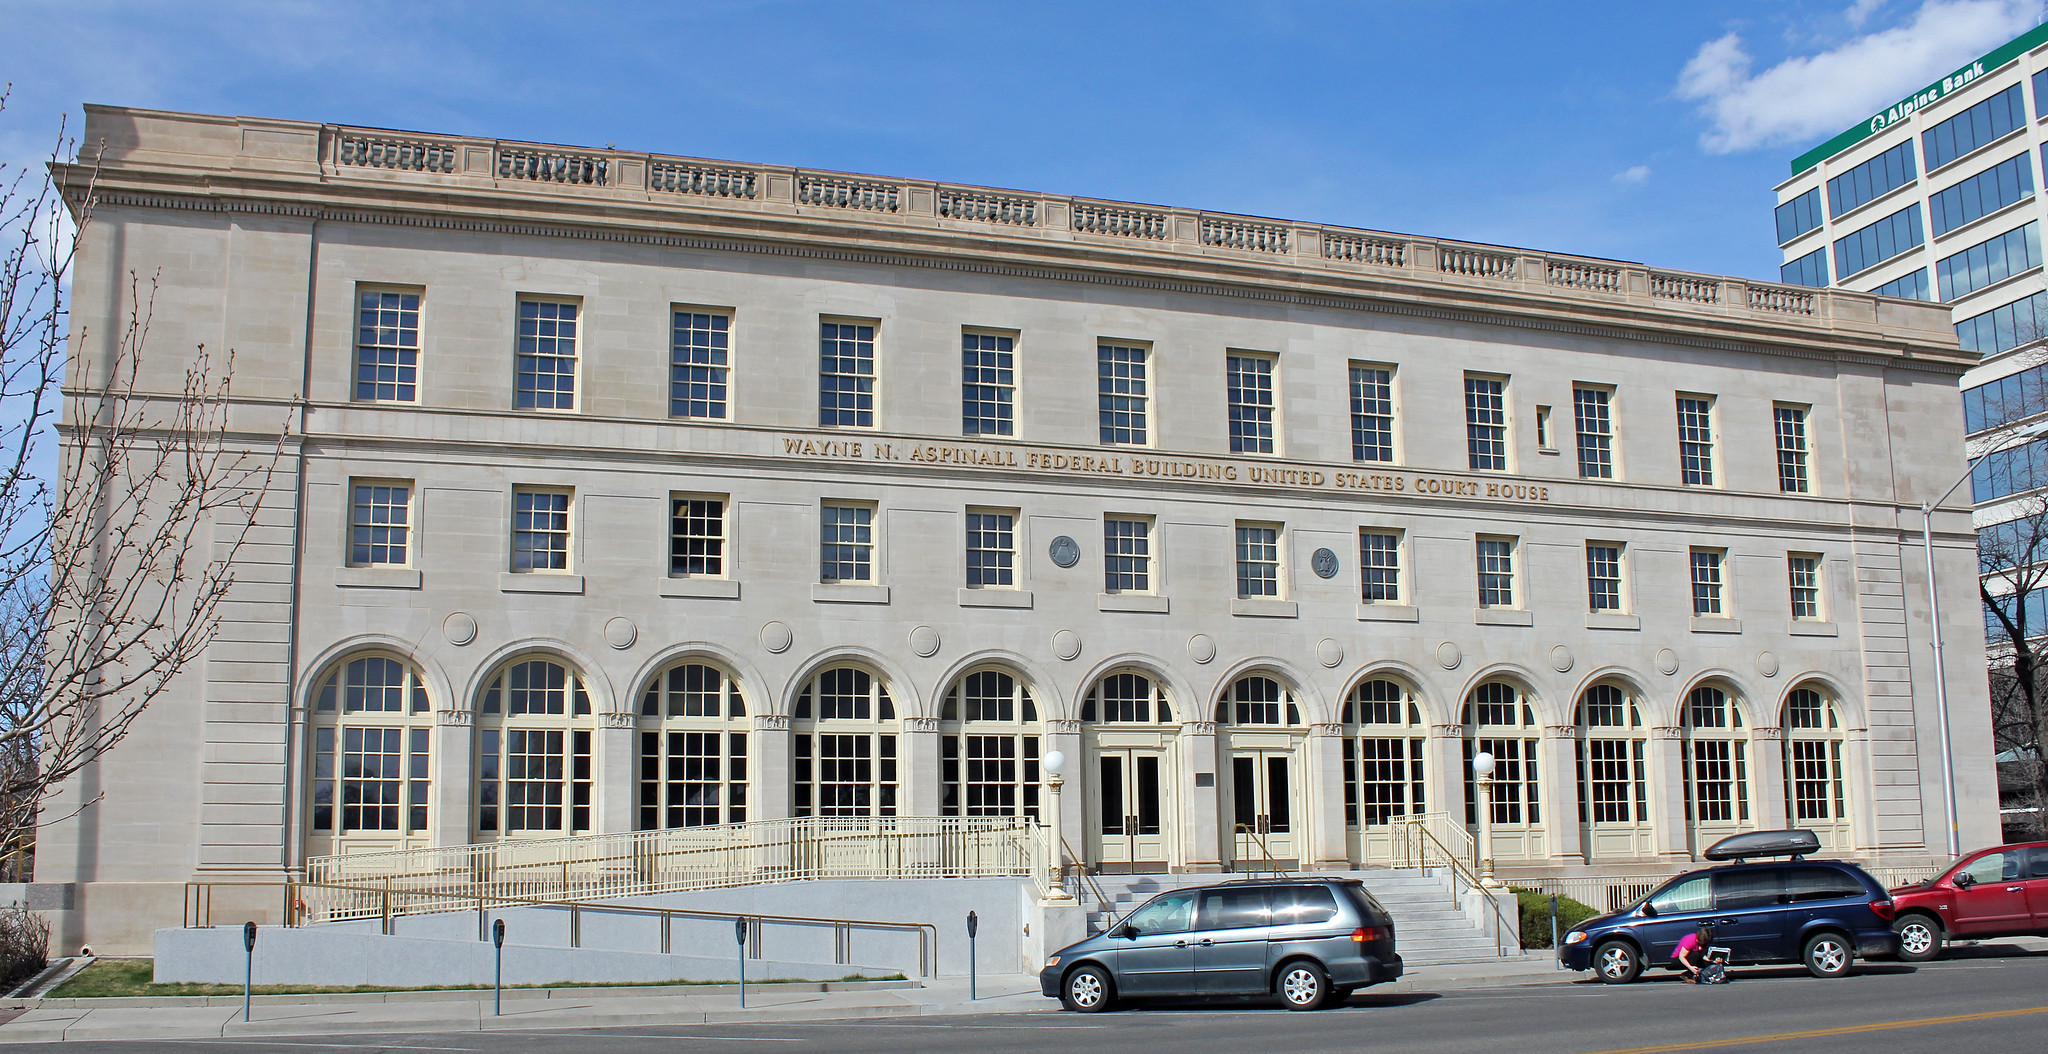 Wayne Aspinall Federal Building & U.S. Courthouse